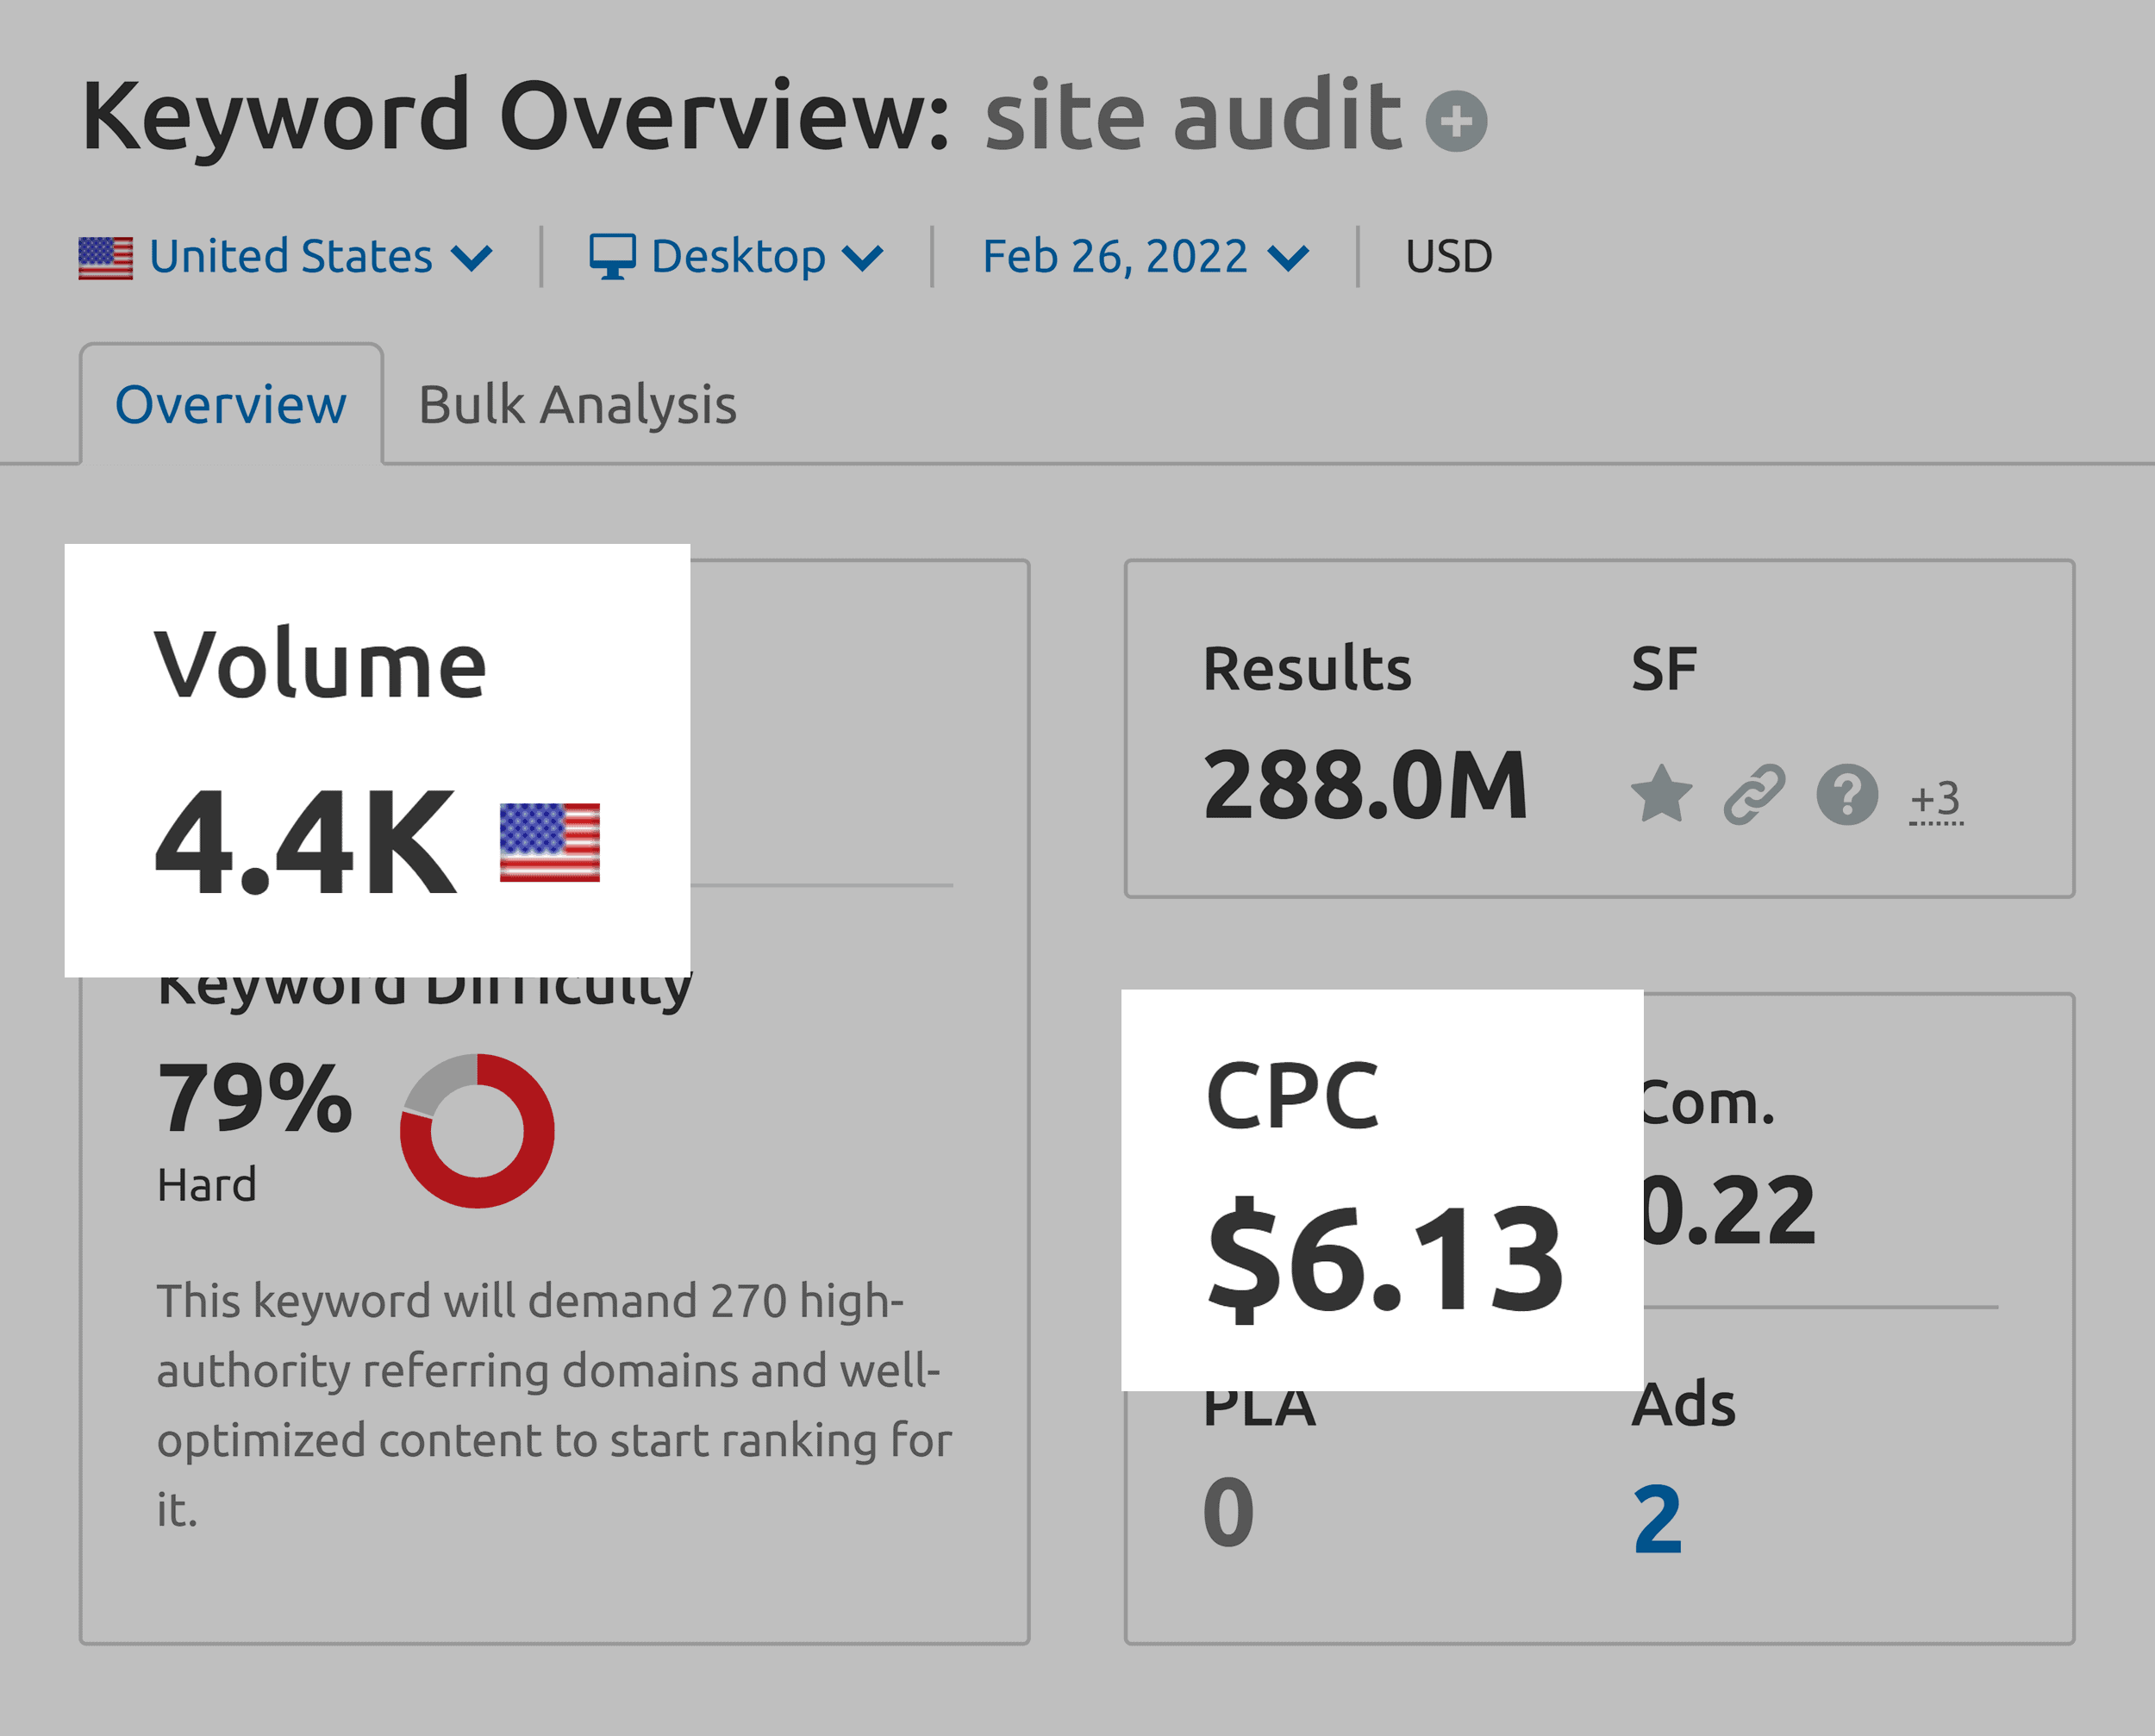 Keyword Overview – Site audit